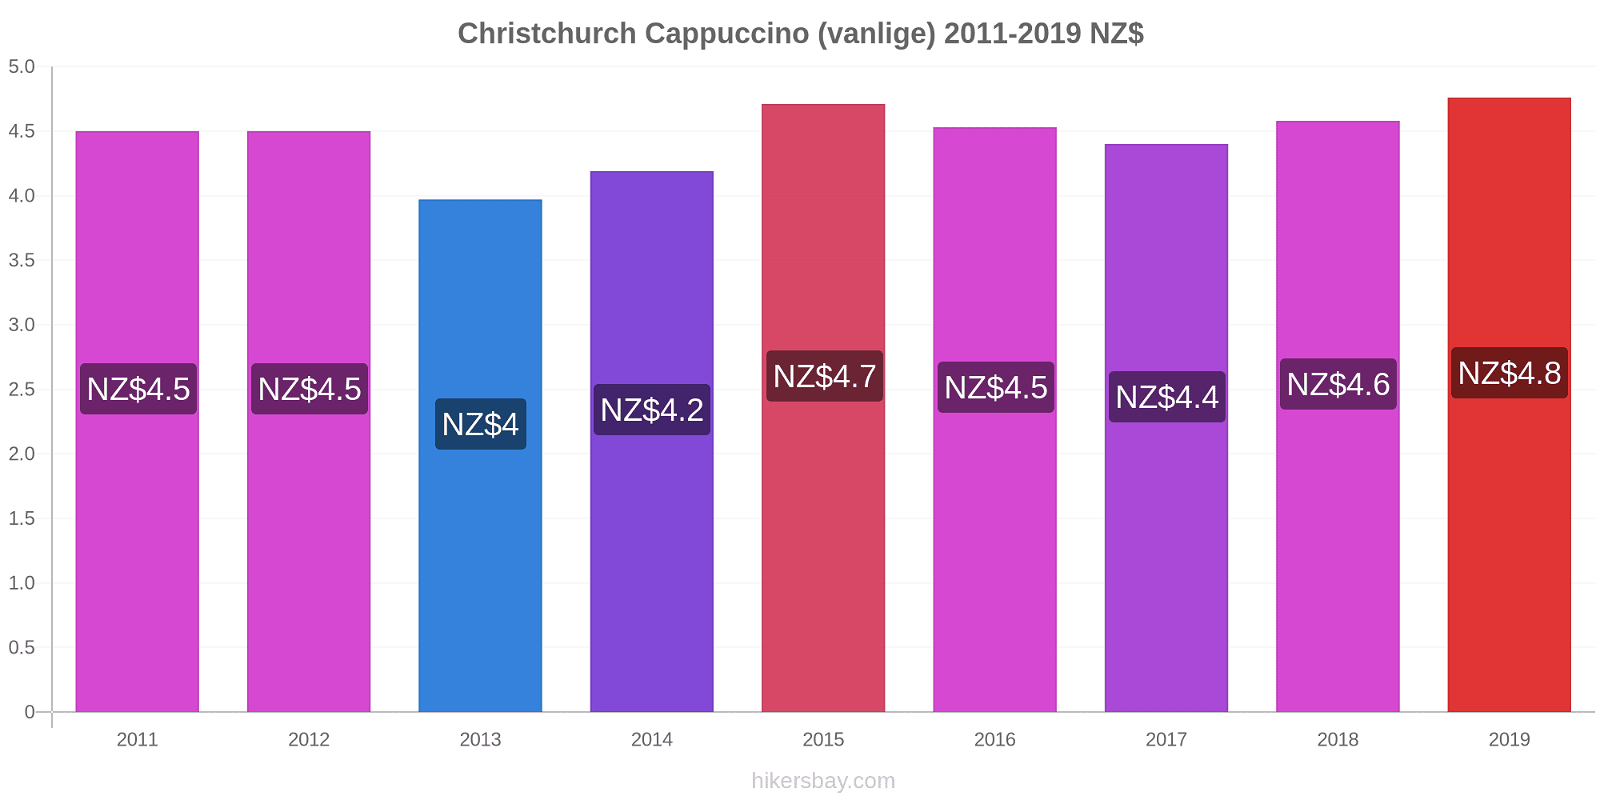 Christchurch prisendringer Cappuccino (vanlige) hikersbay.com